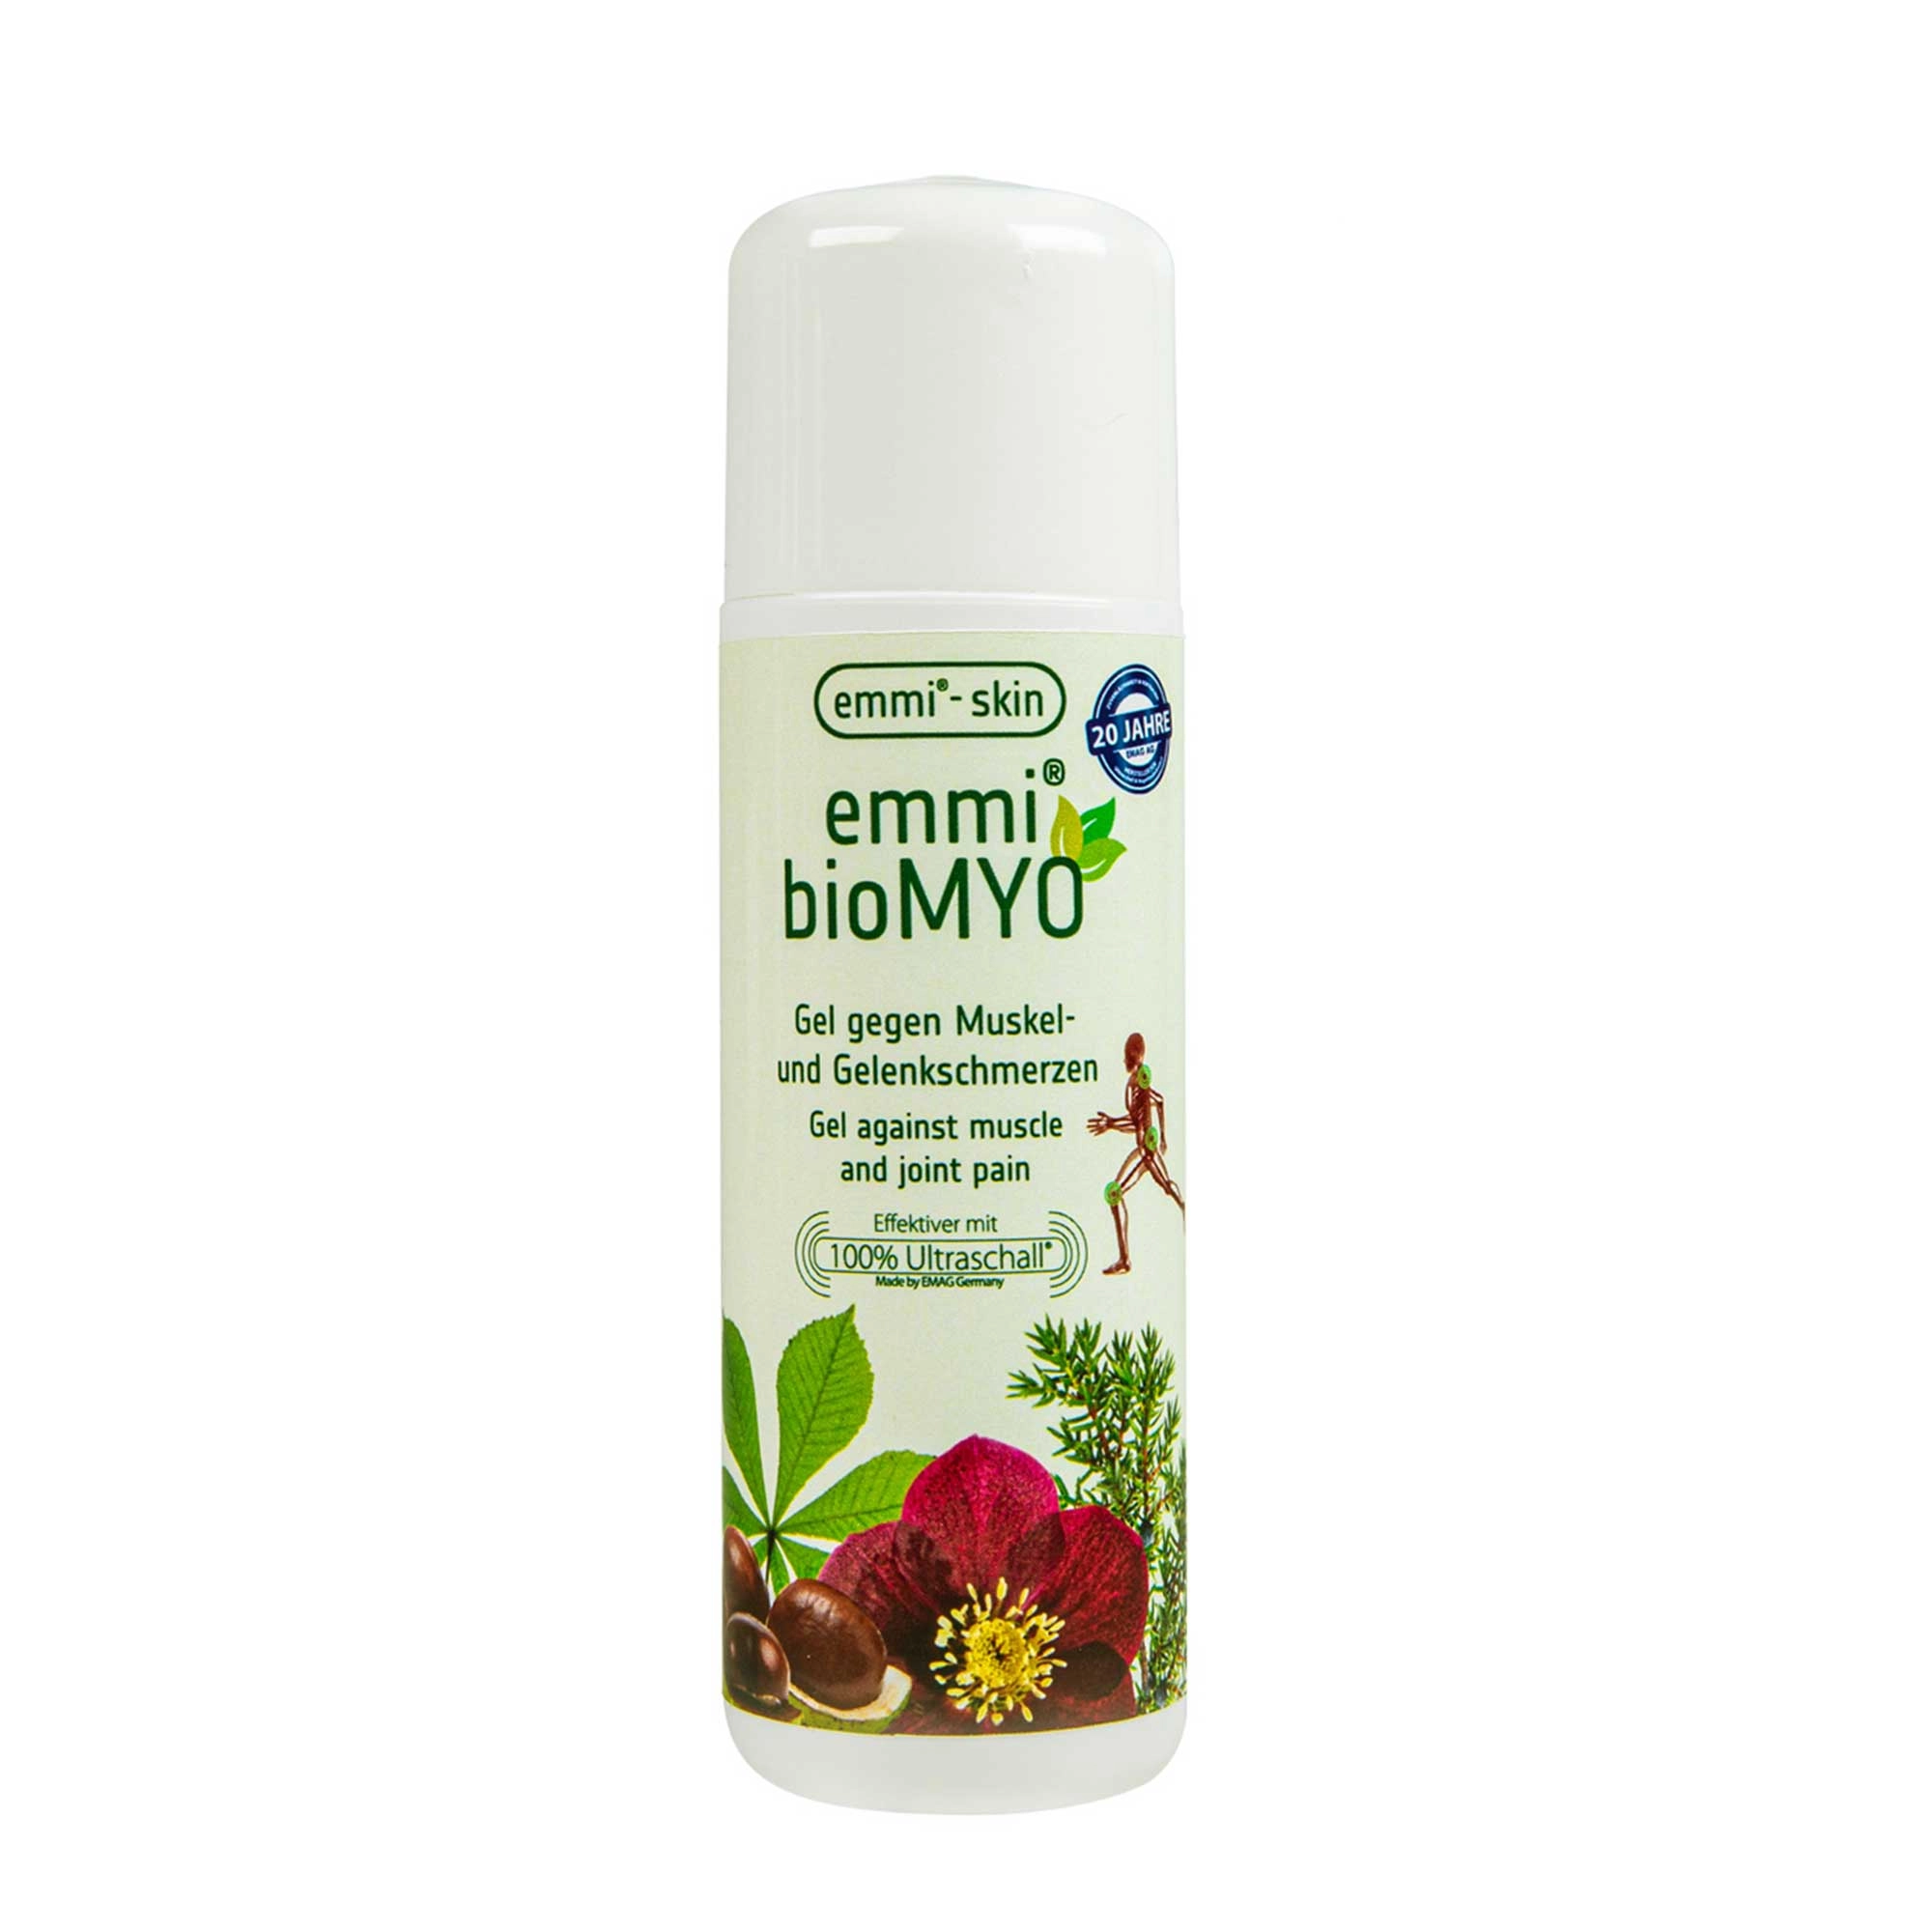 bioMYO - 150ml